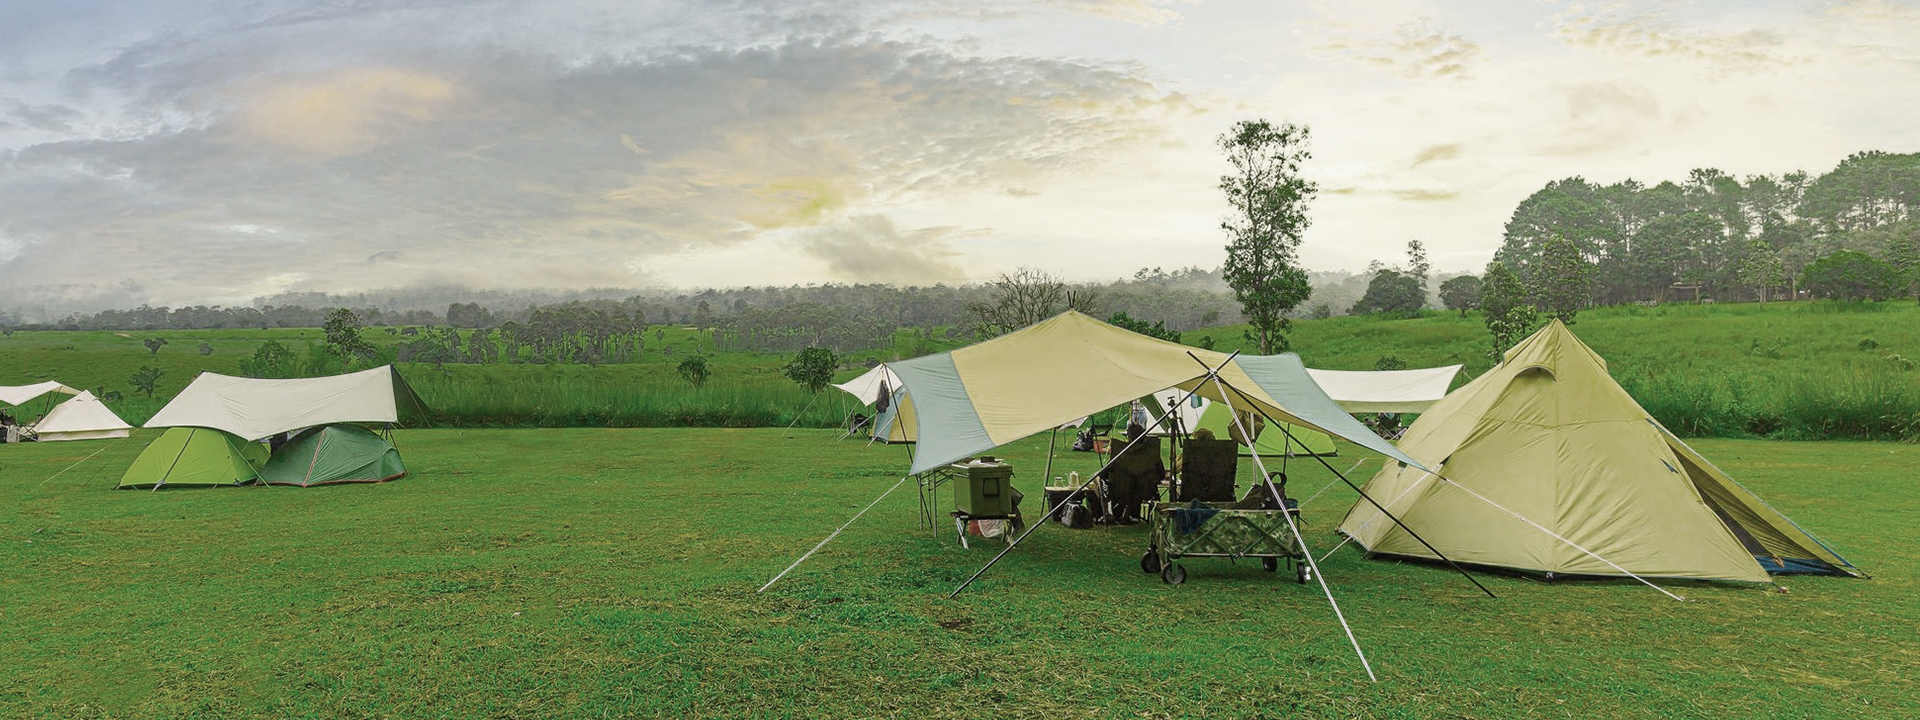 campinggolden-sunrise-illuminated-camping-tent-dramatic-mountain-landscape-panorama-thailand